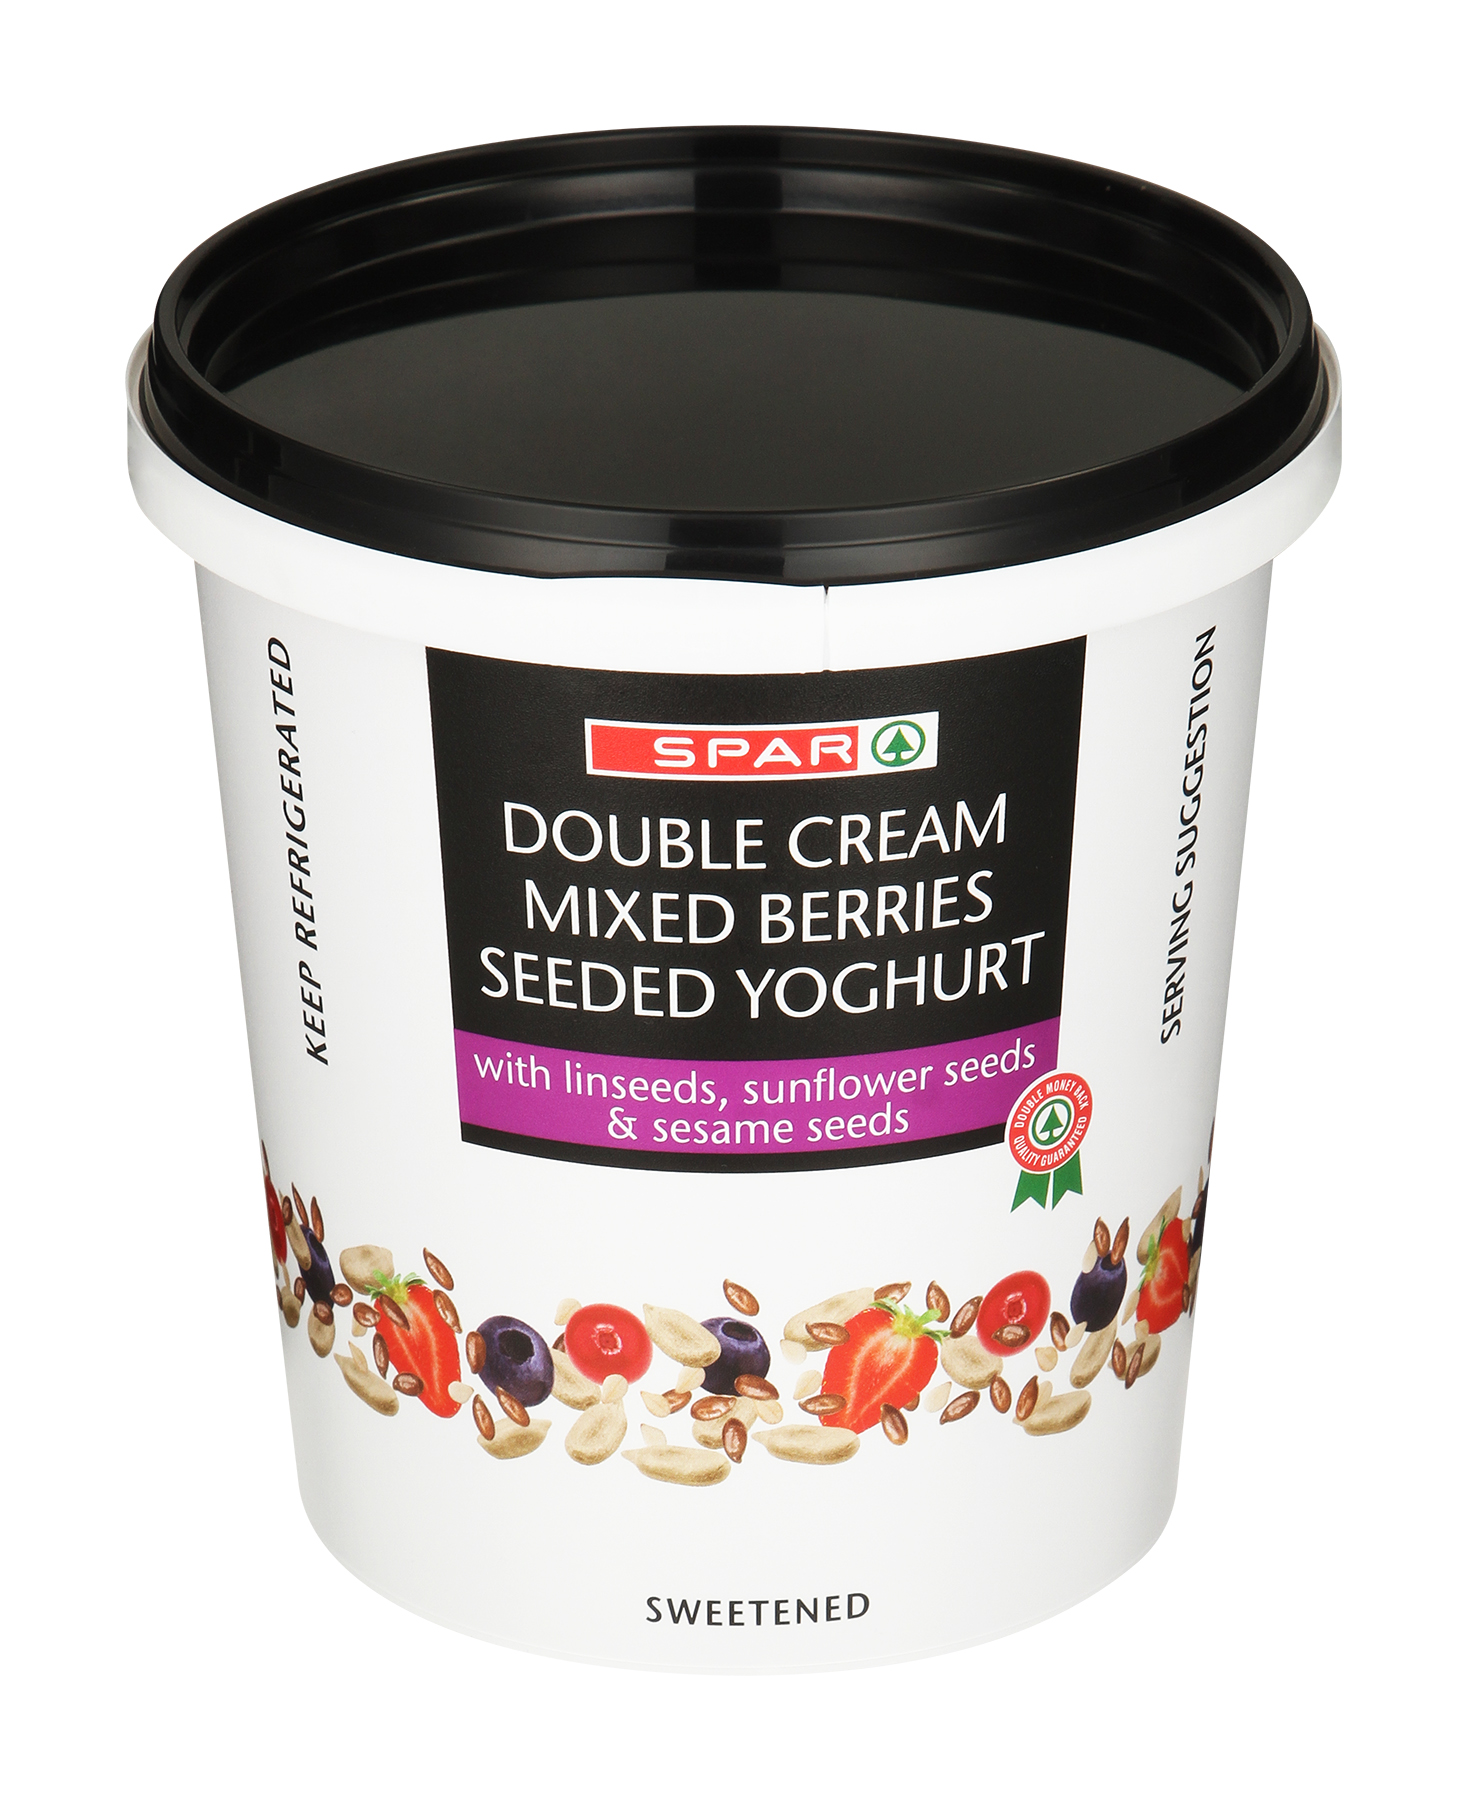 double cream - mixed berries seeded yoghurt